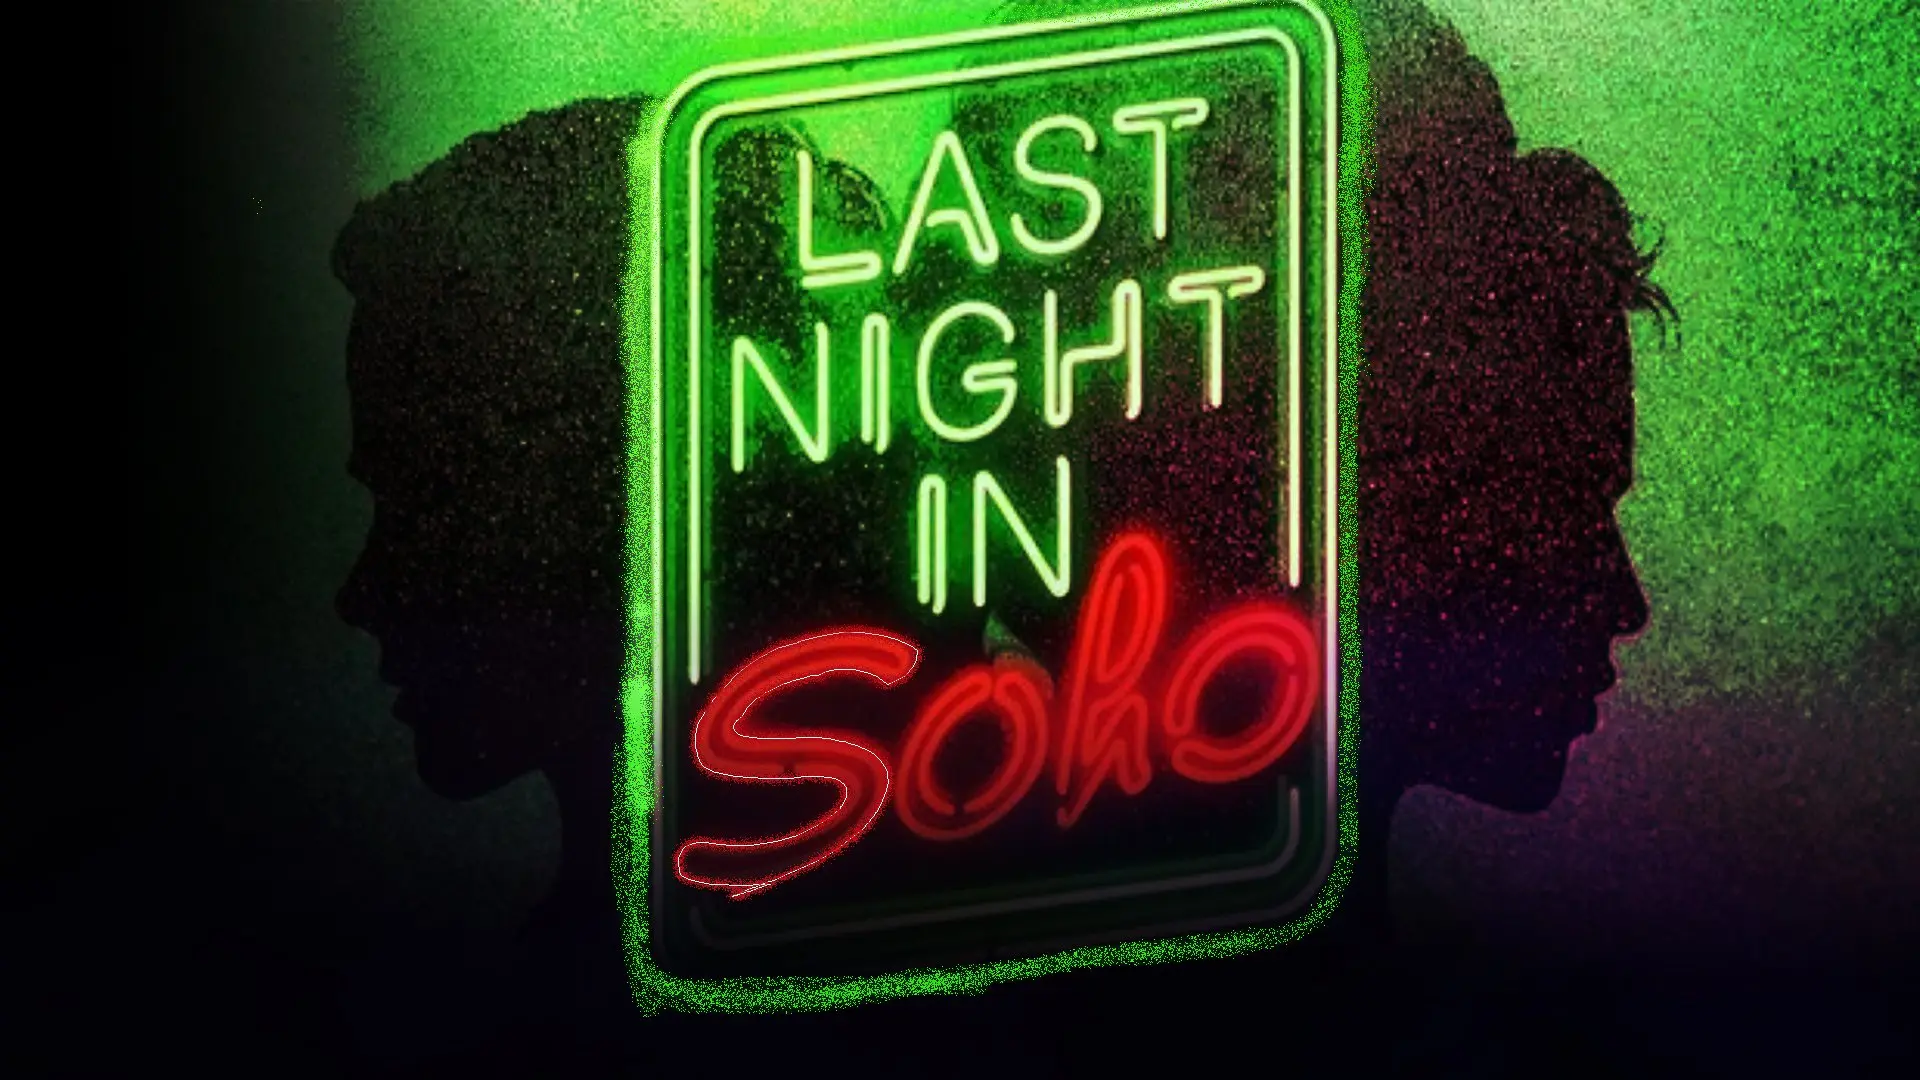 Edgar Wright's 'Last Night In Soho' Trailer Has Dropped